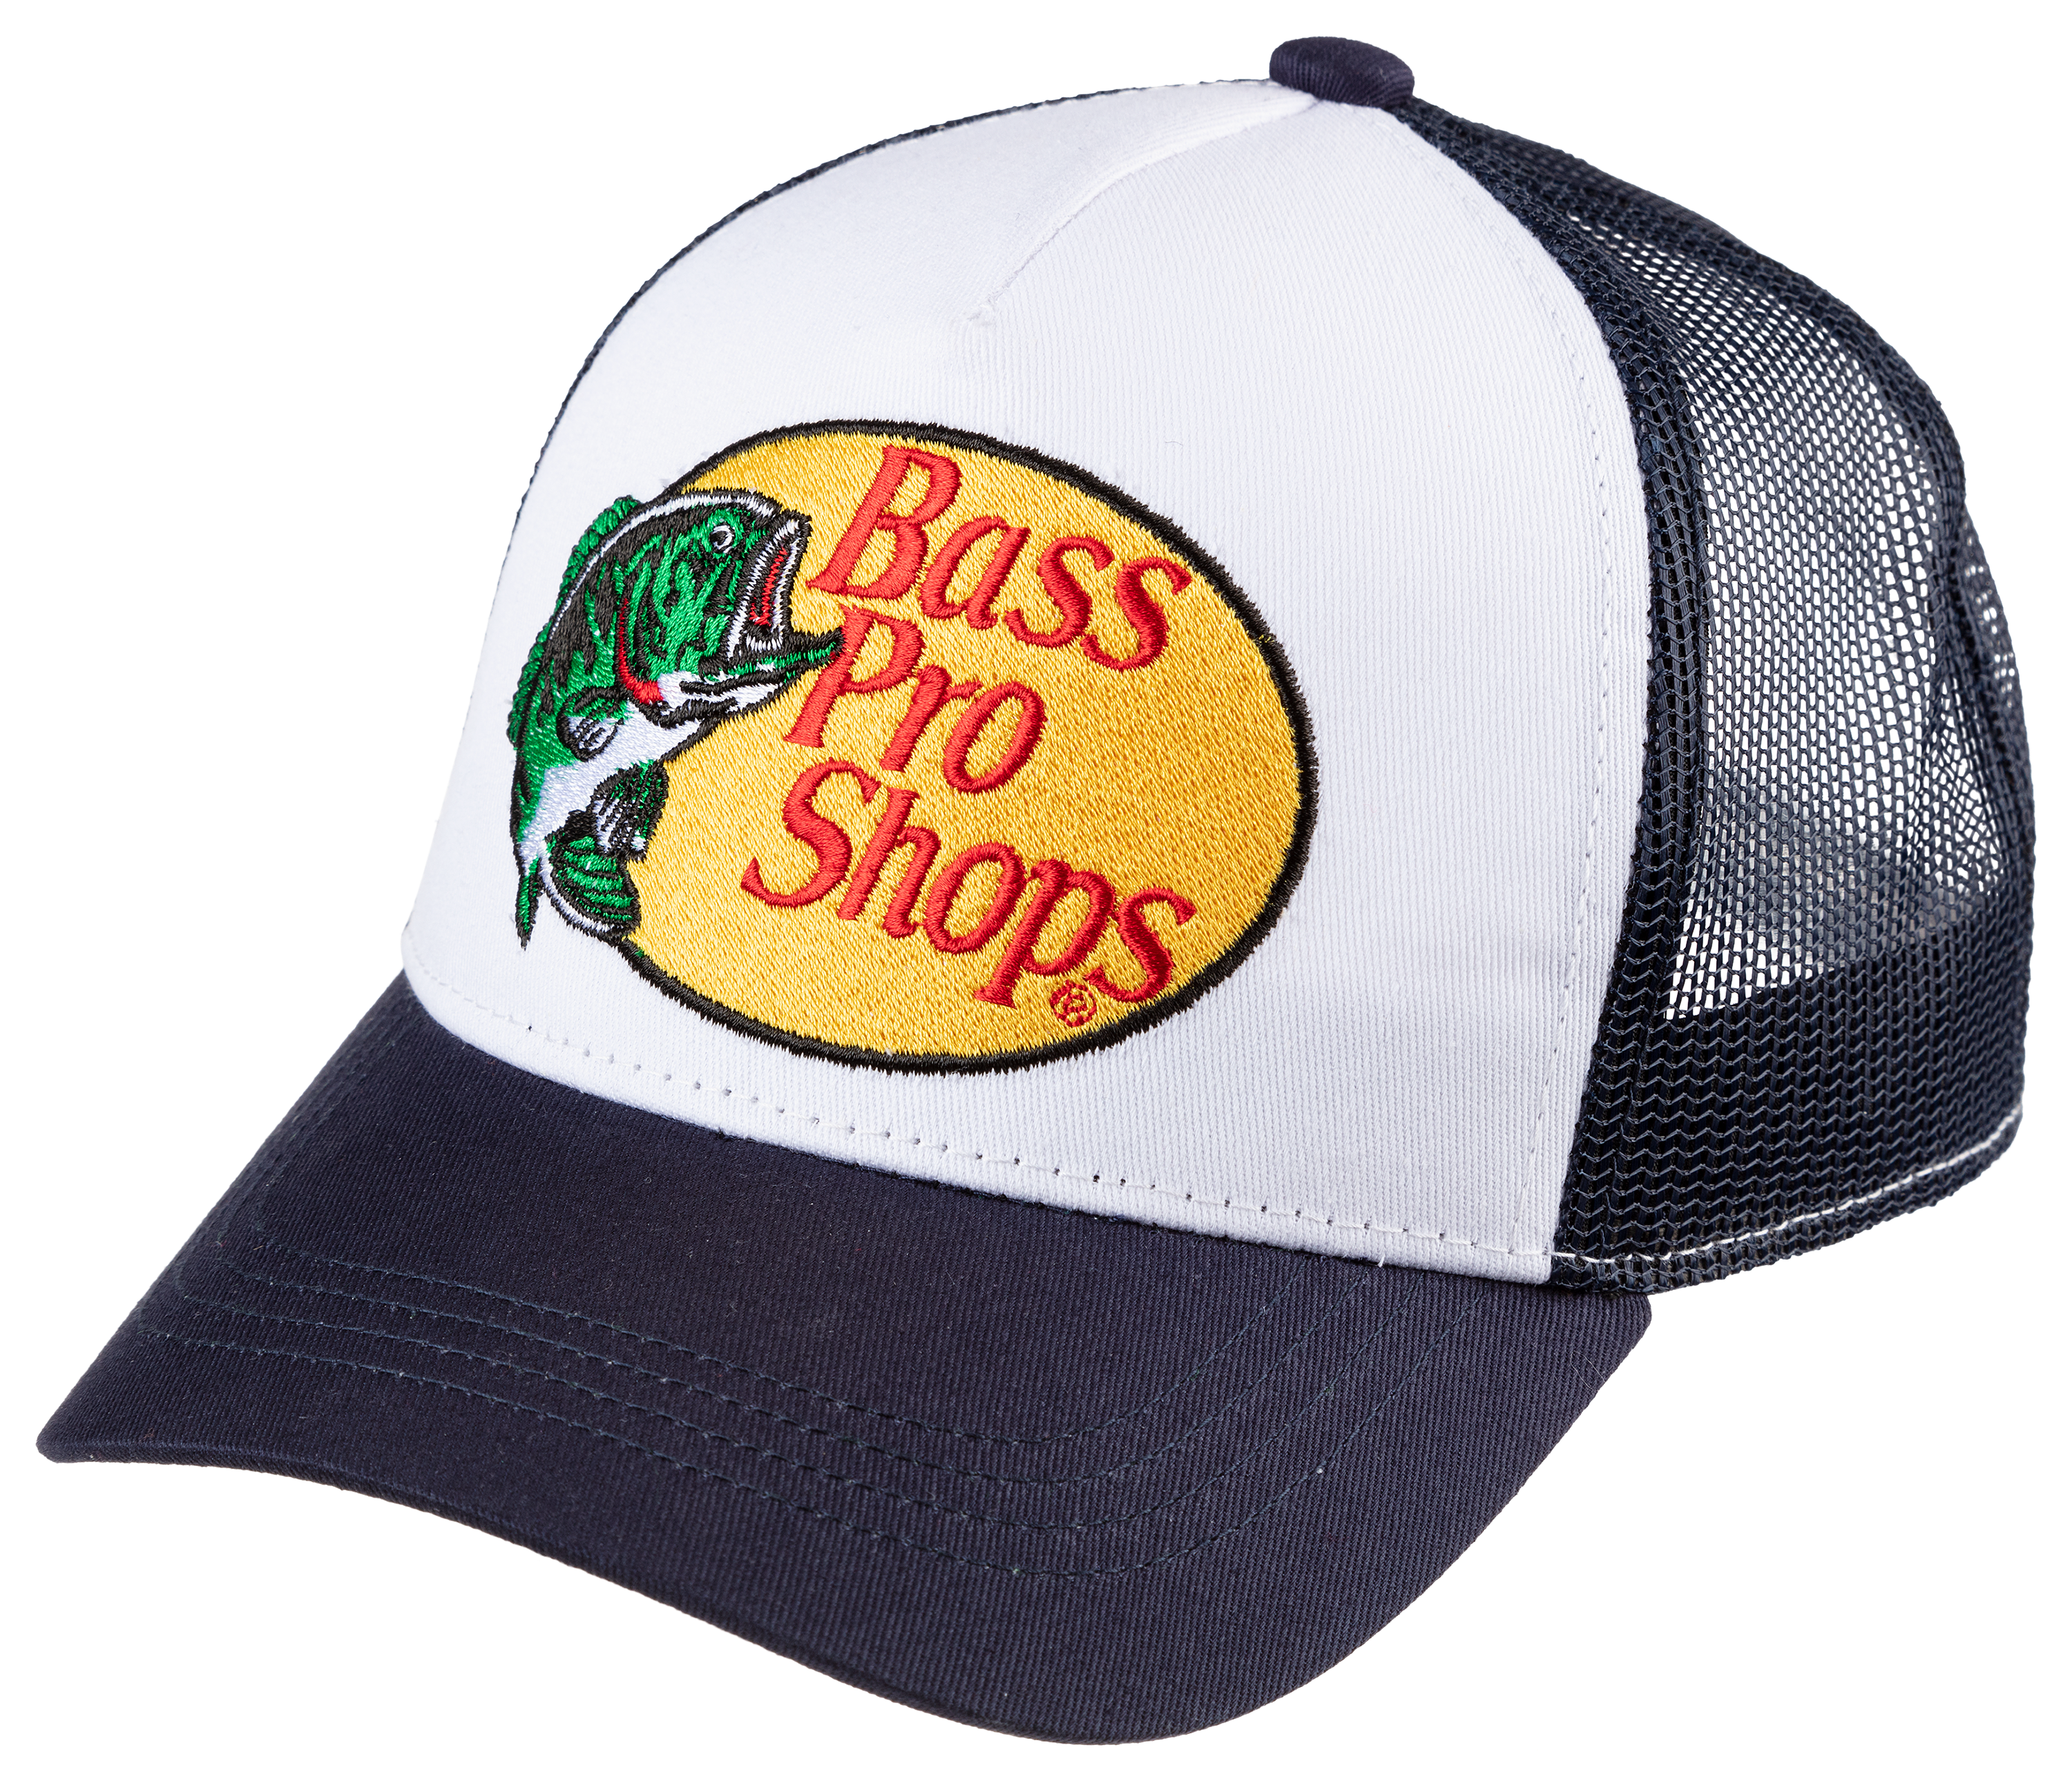 Bass Pro Shops Logo Mesh Cap for Kids